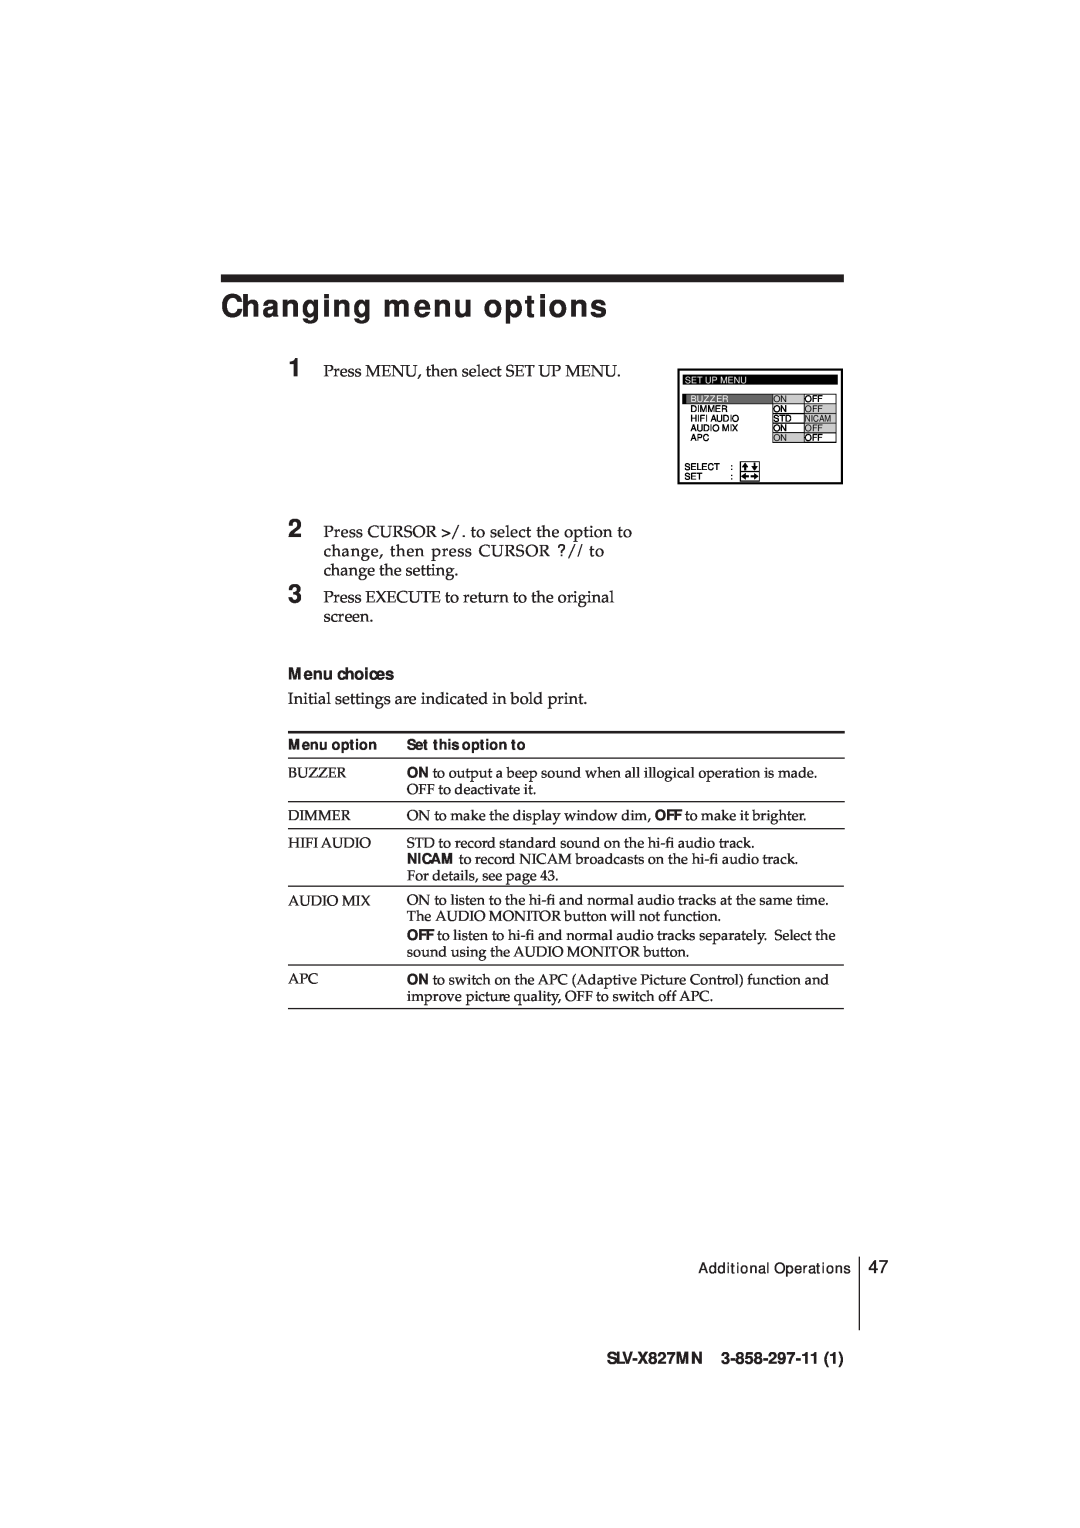 Sony manual Changing menu options, Menu choices, SLV-X827MN 3-858-297-11, Menu option, Set this option to 